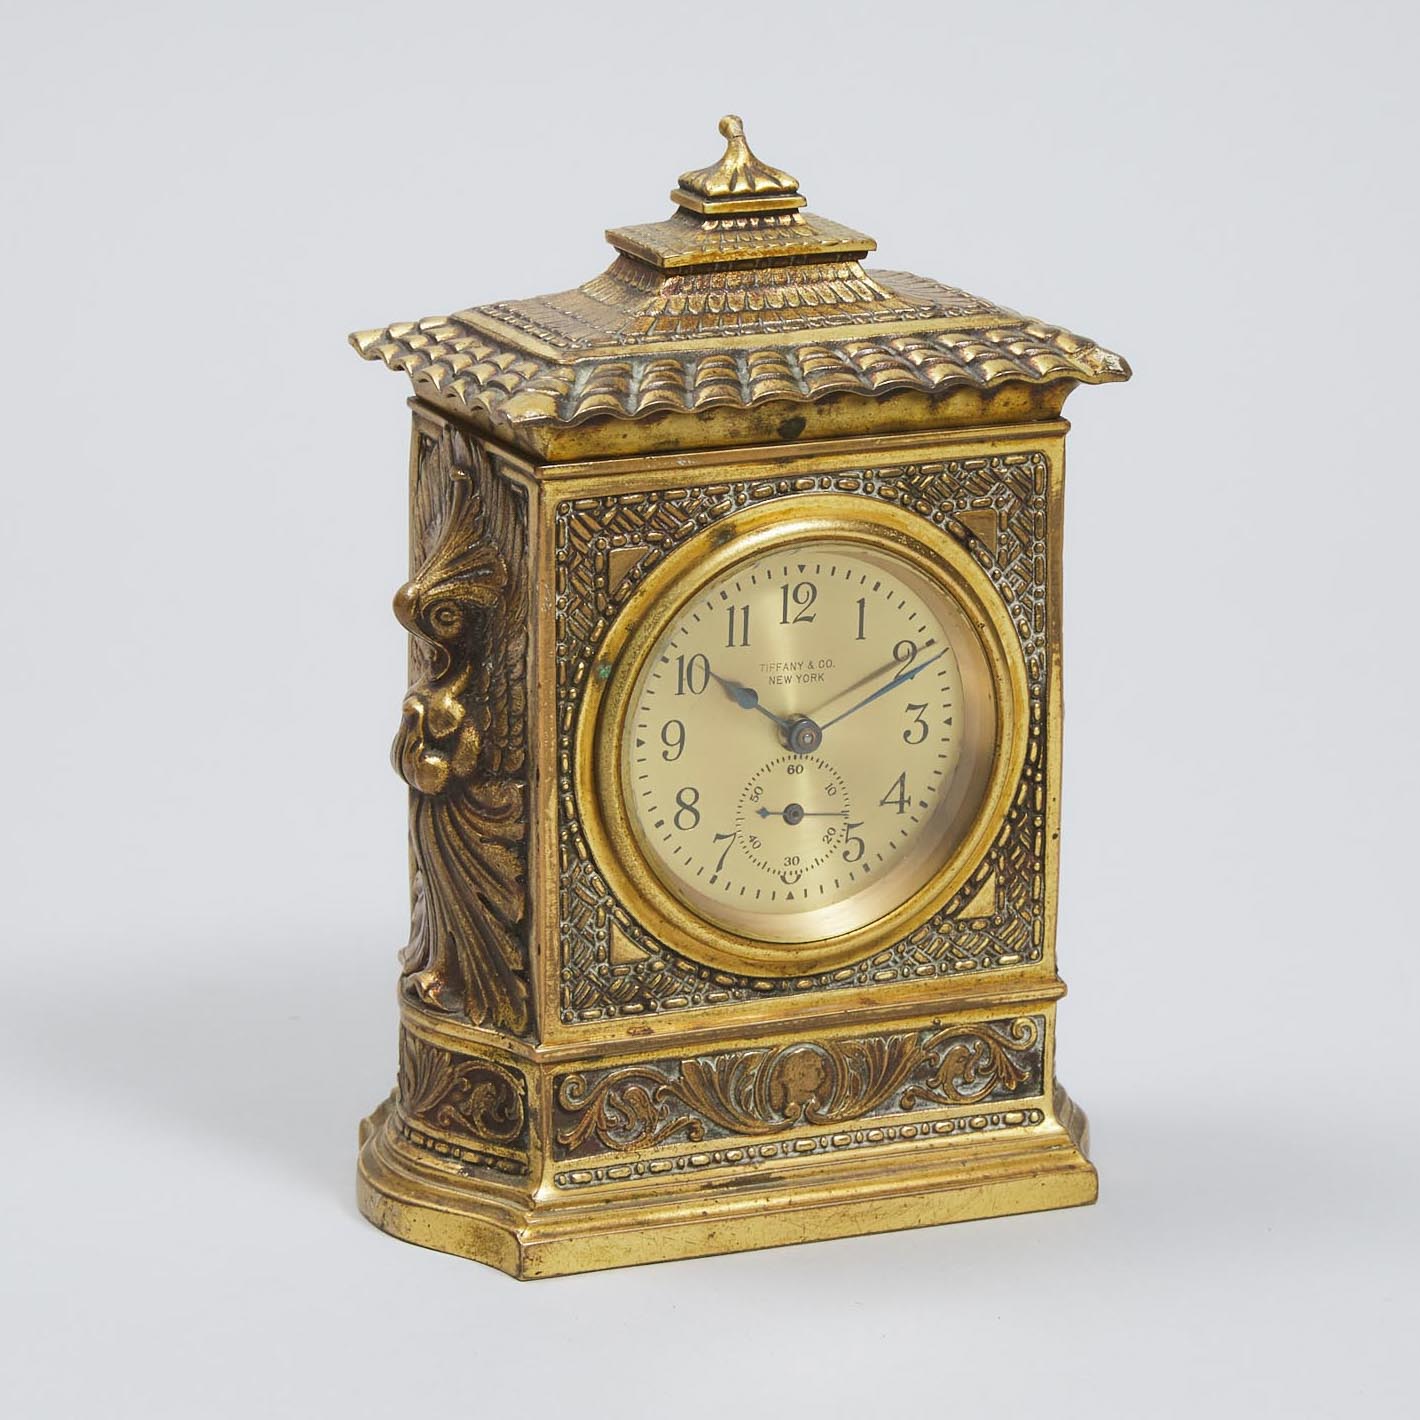 Tiffany Studios, New York 'Spanish Pattern’ Gilt Bronze Table/Desk Clock, early 20th century